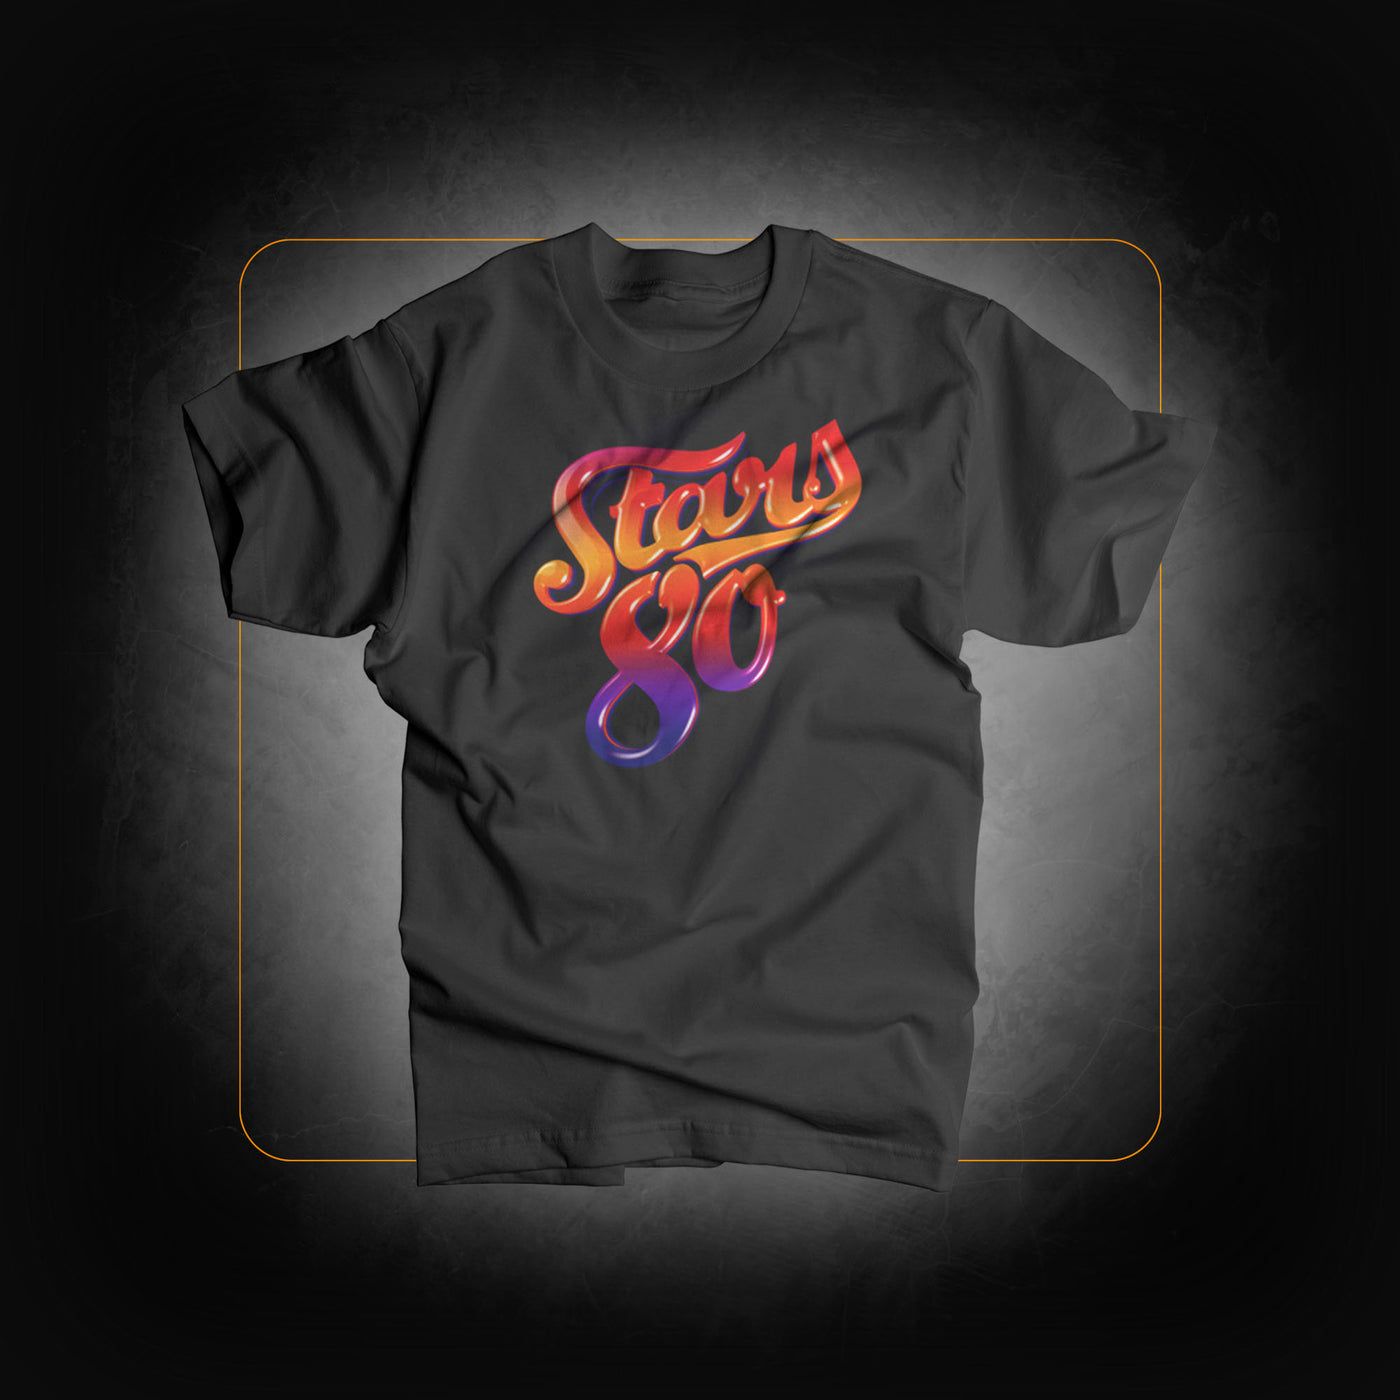 T-Shirt Stars 80